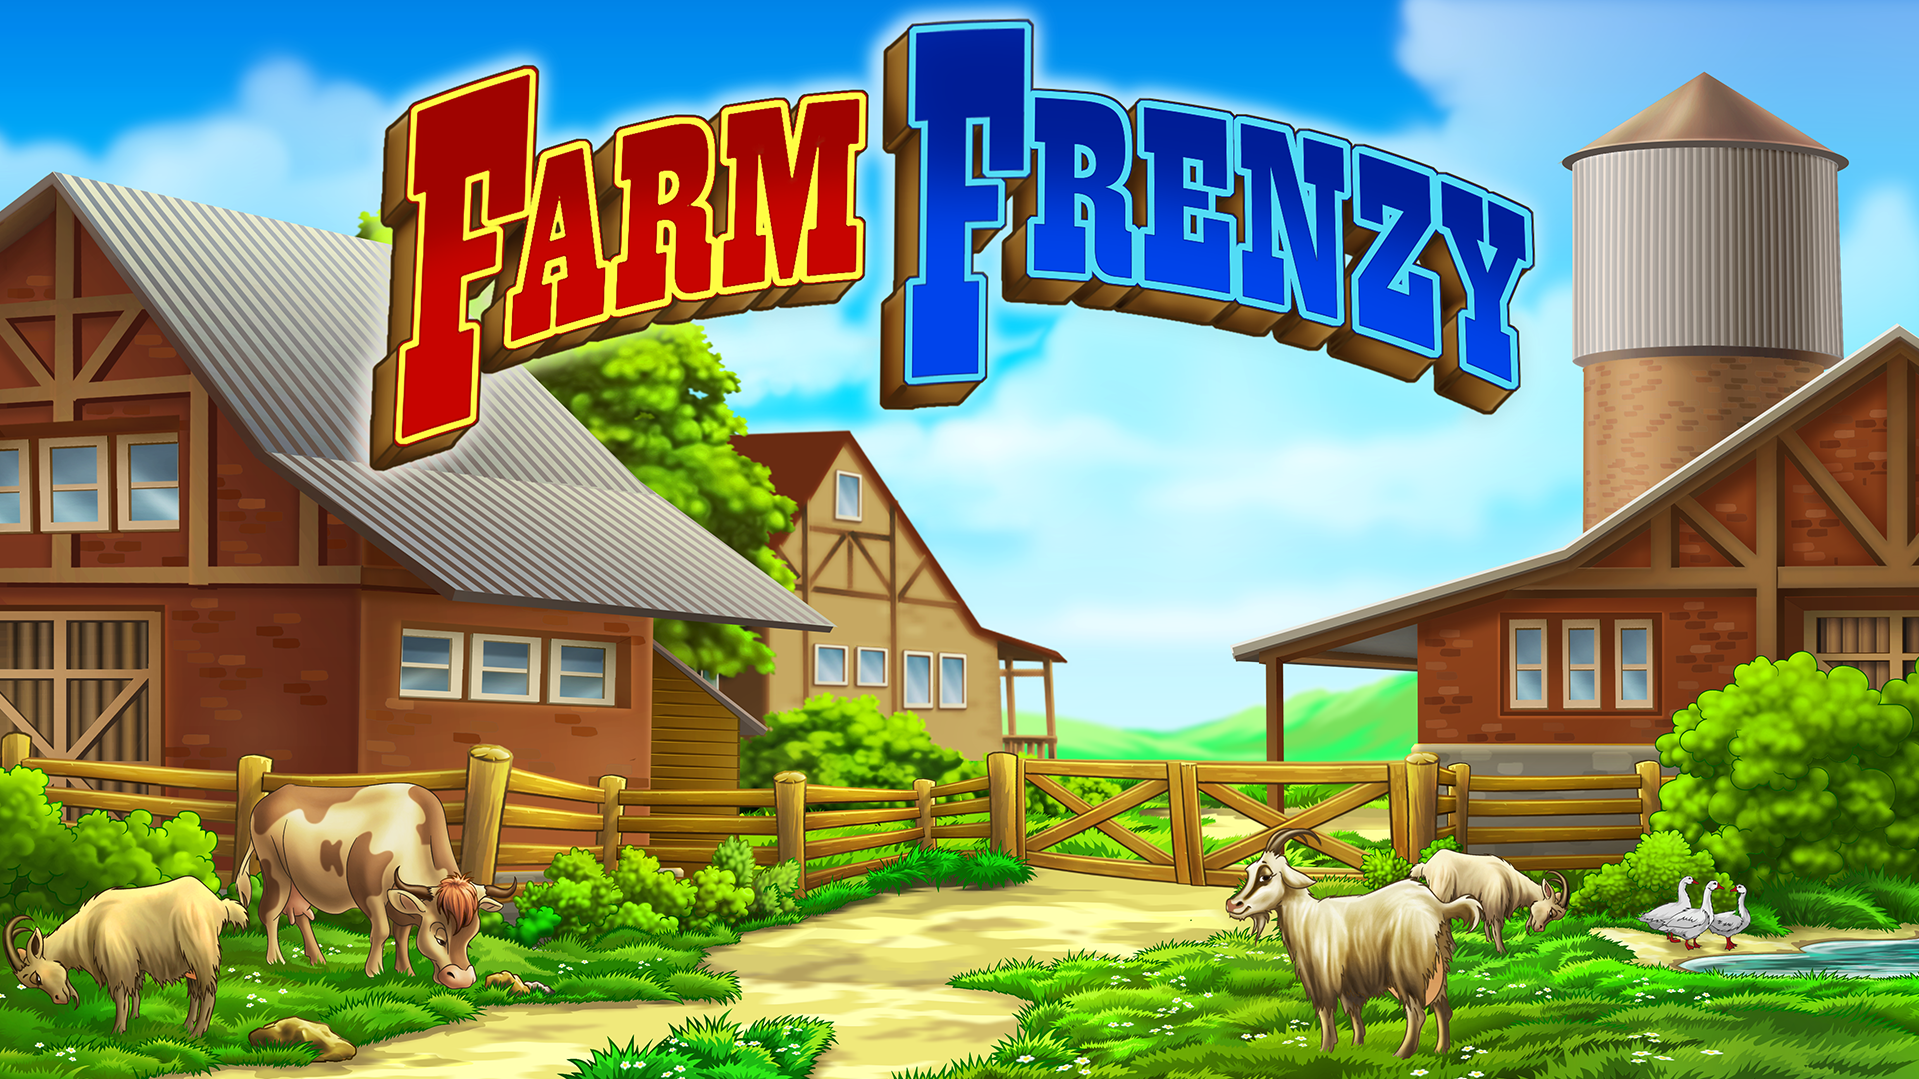 Screenshot 1 of Farm Frenzy: Happy Village près de Big Town 0.8